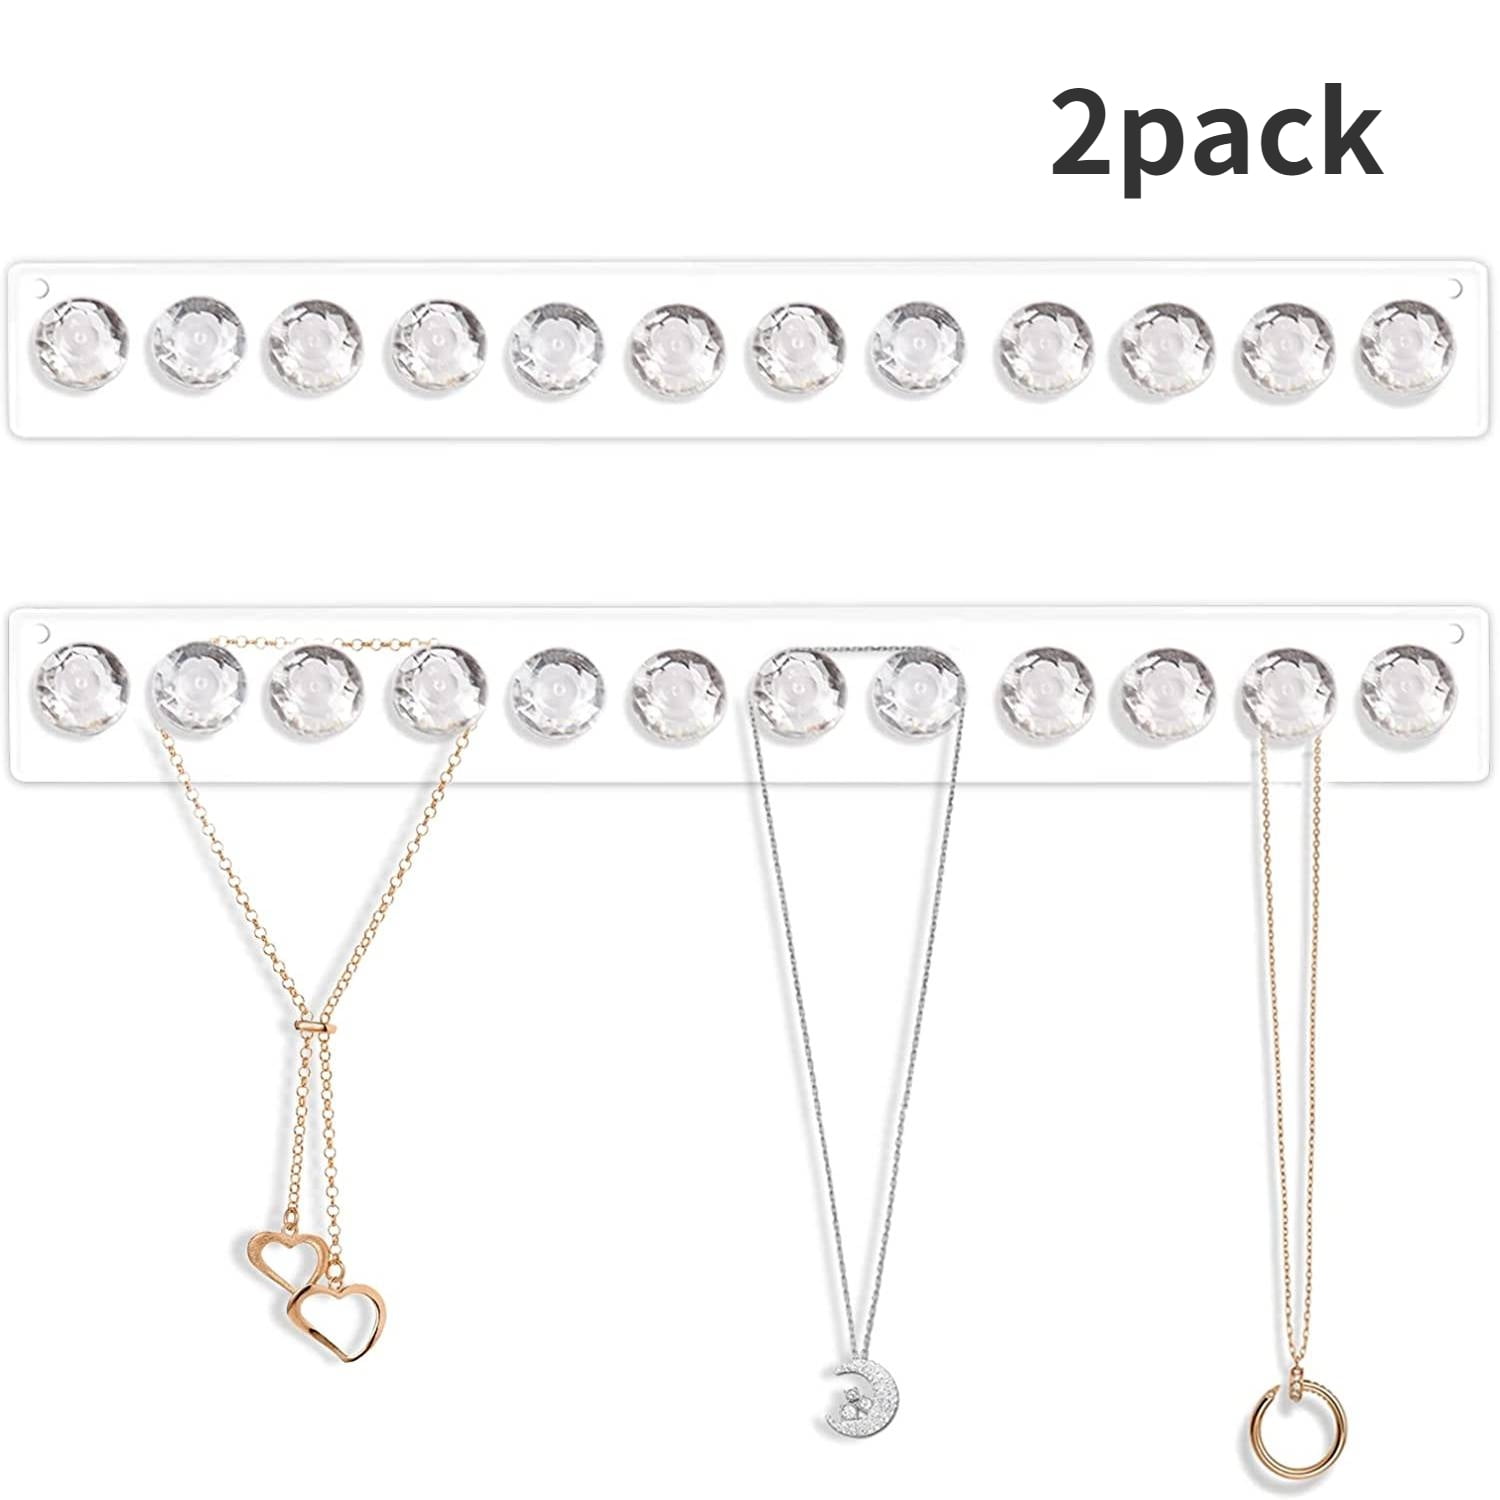 Necklace Hook